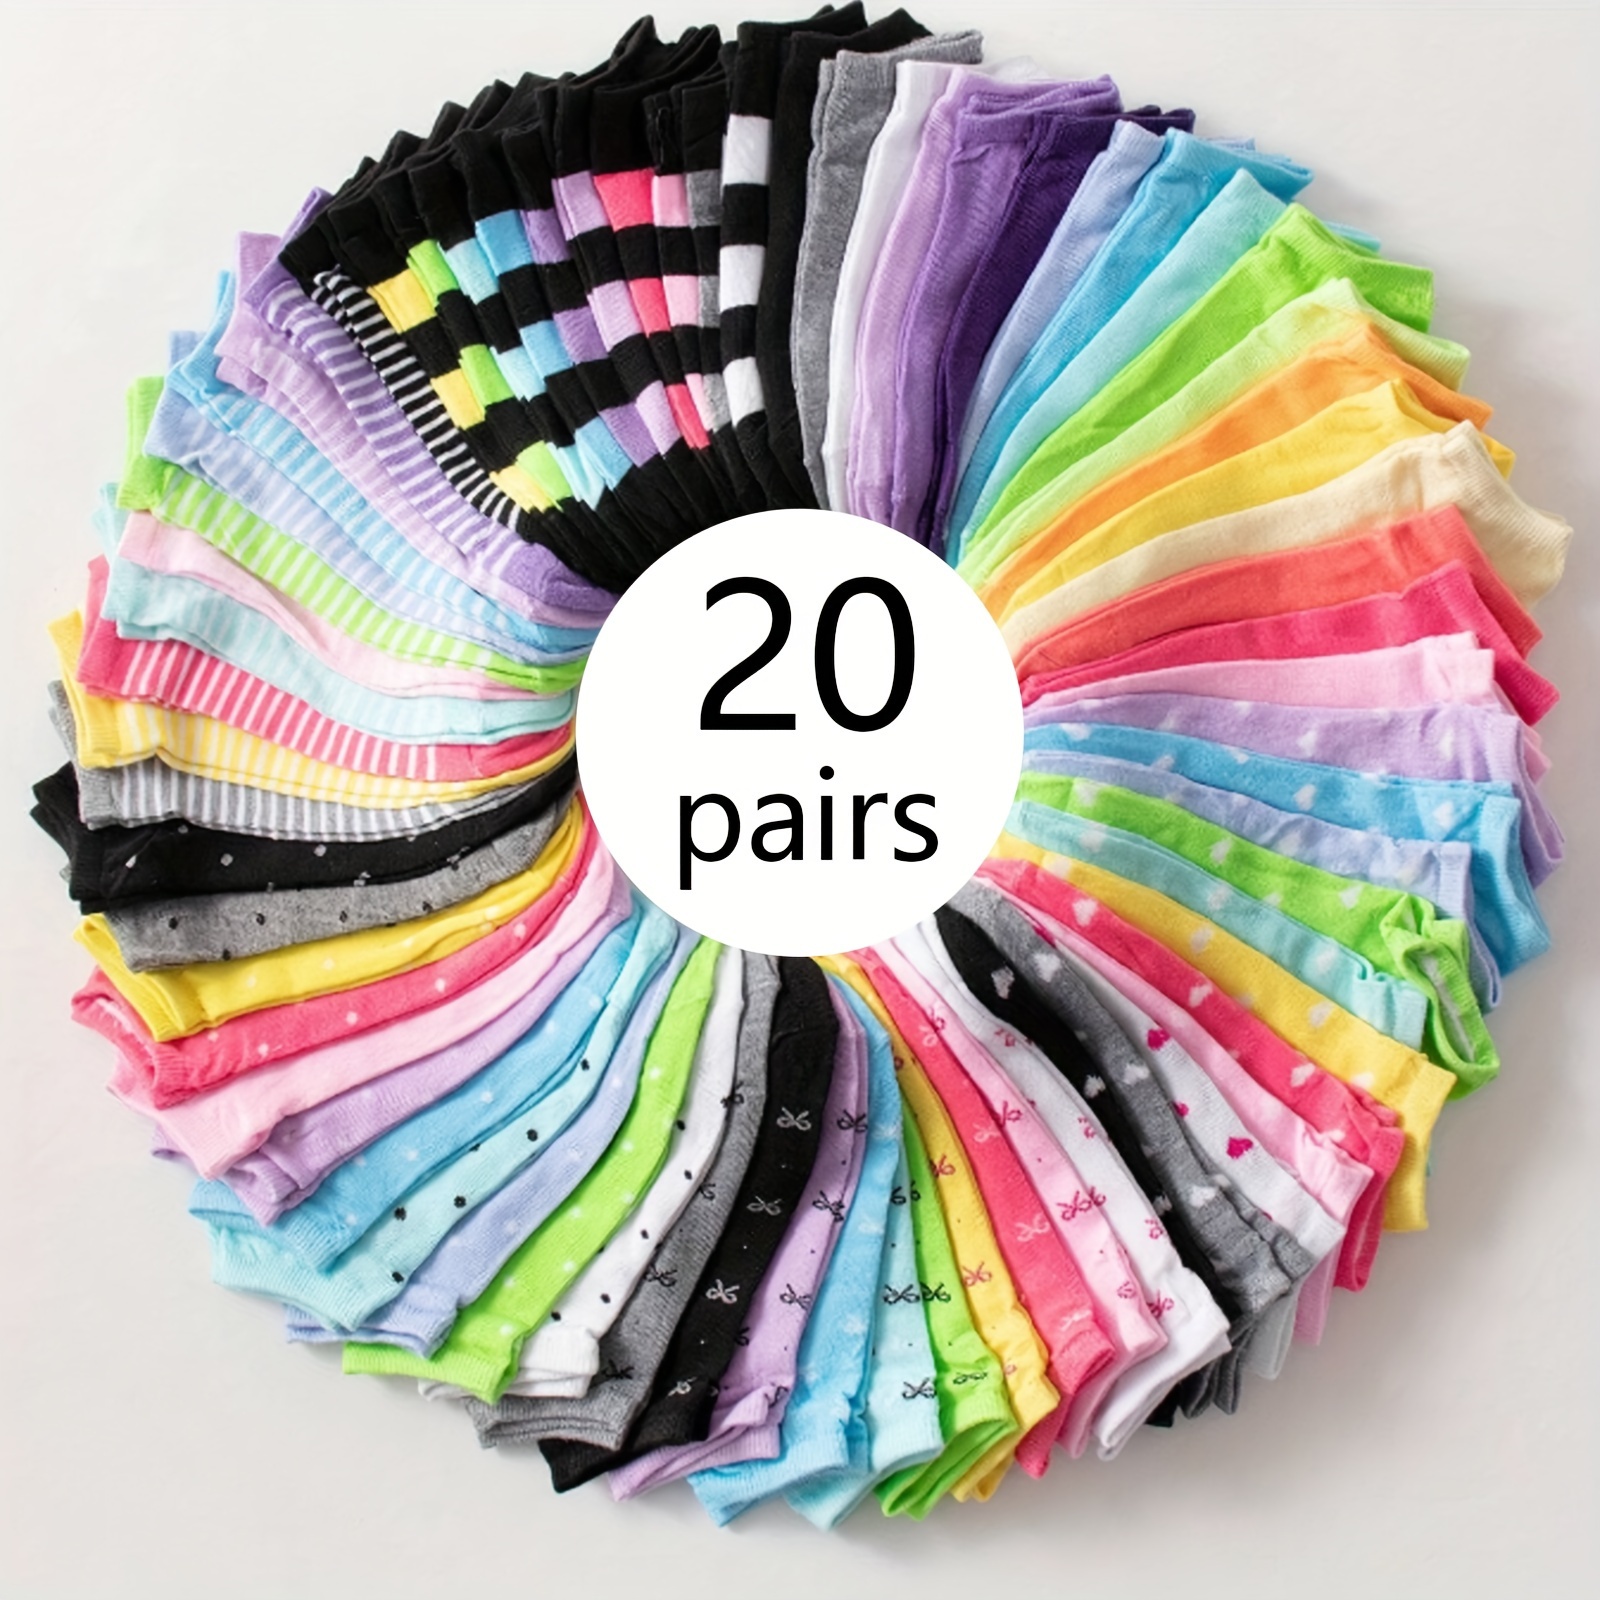 

20 Pairs Random Color Socks, Soft & Comfy Breathable Ankle Socks, Women's Stockings & Hosiery